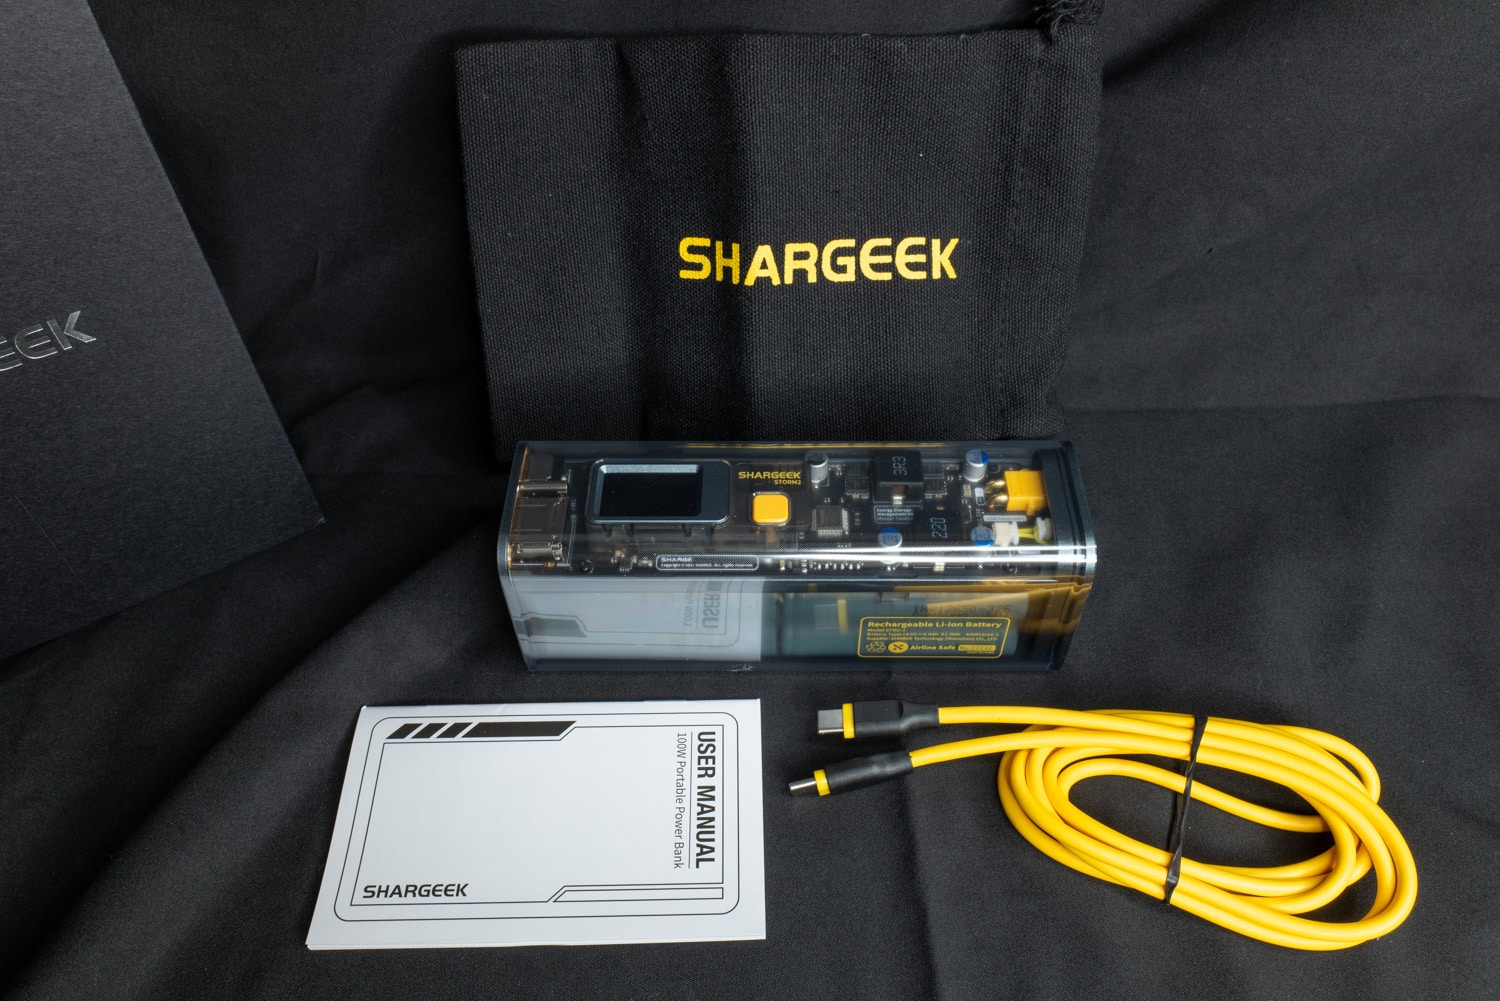 Shargeek 100 test - First laptop powerbank with throughput